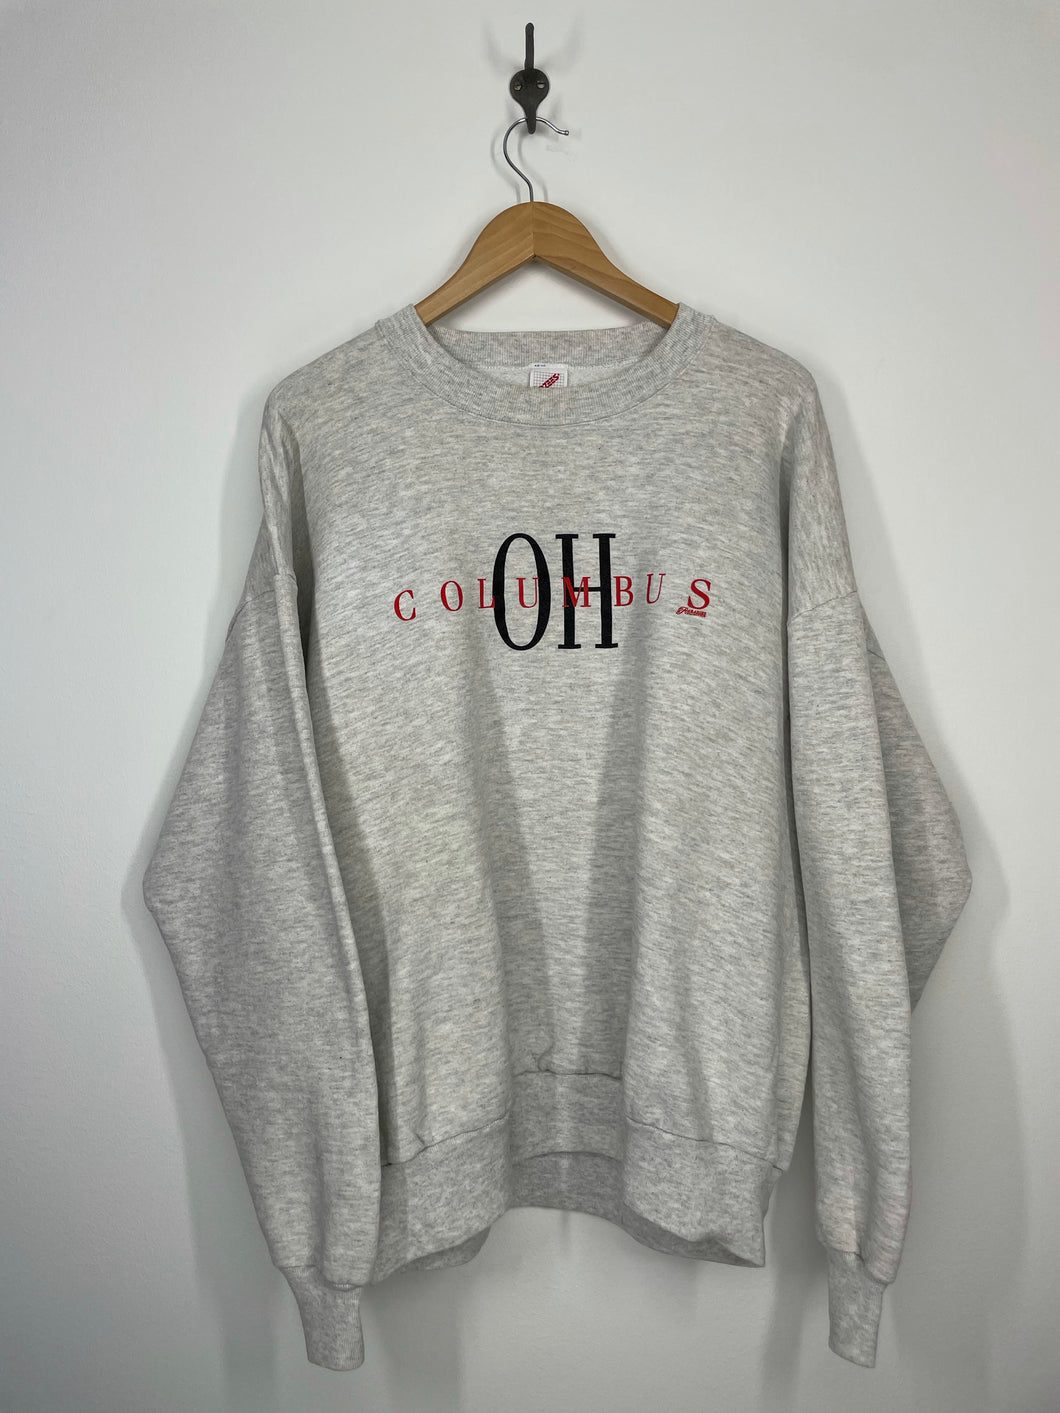 Columbus Ohio Tourist Souvenir Spell Out Crewneck Sweatshirt - Jerzees - 2XL